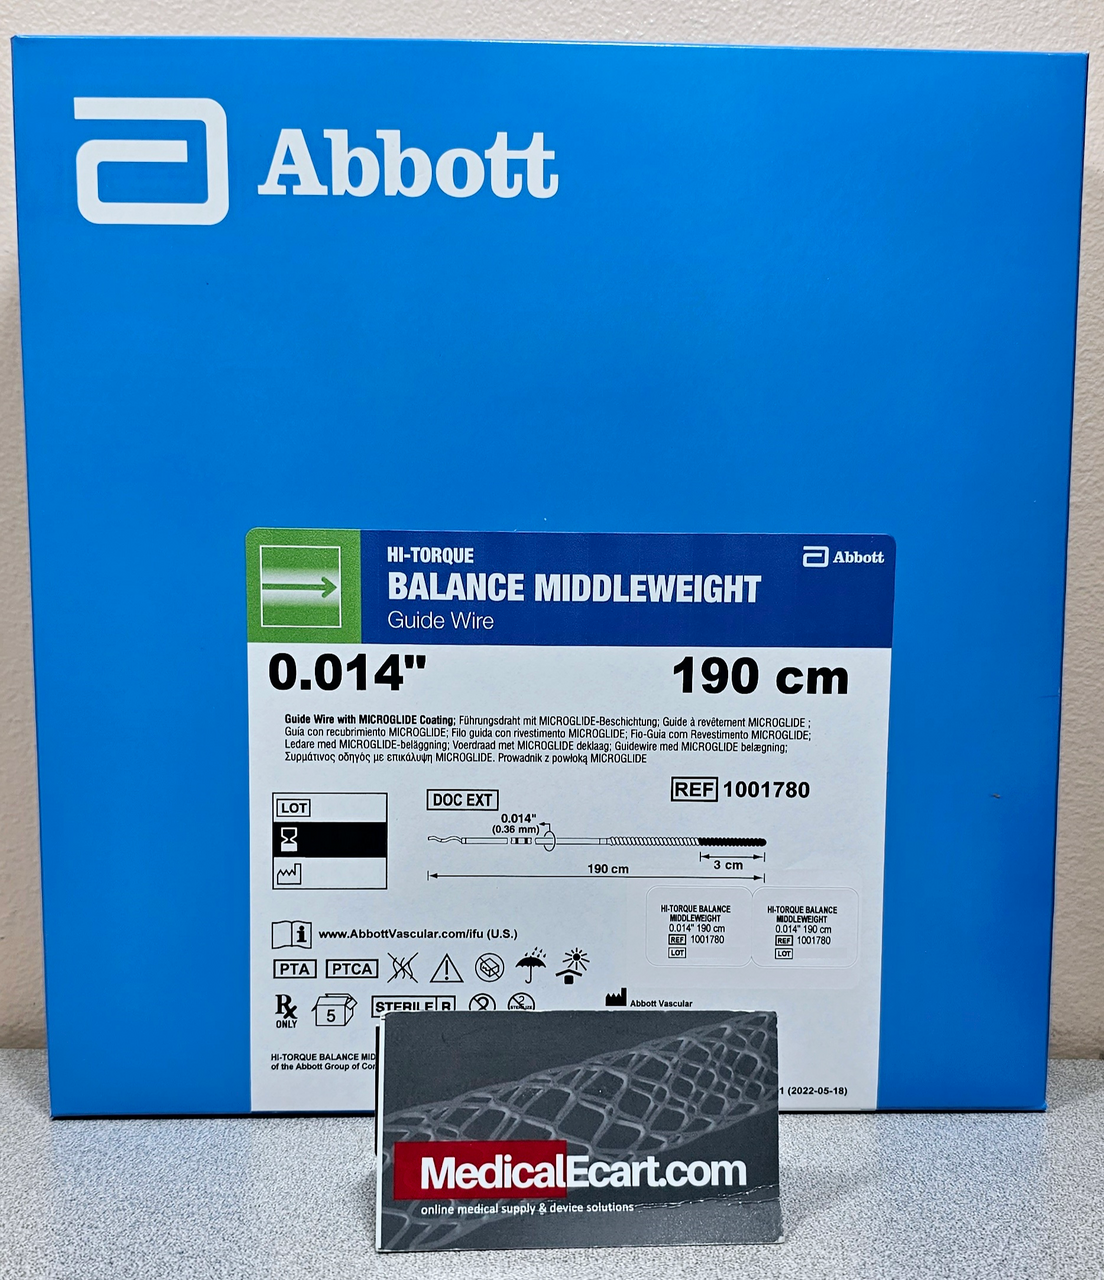 Abbott 1001780 HI-TORQUE BALANCE MIDDLEWEIGHT Guide Wire